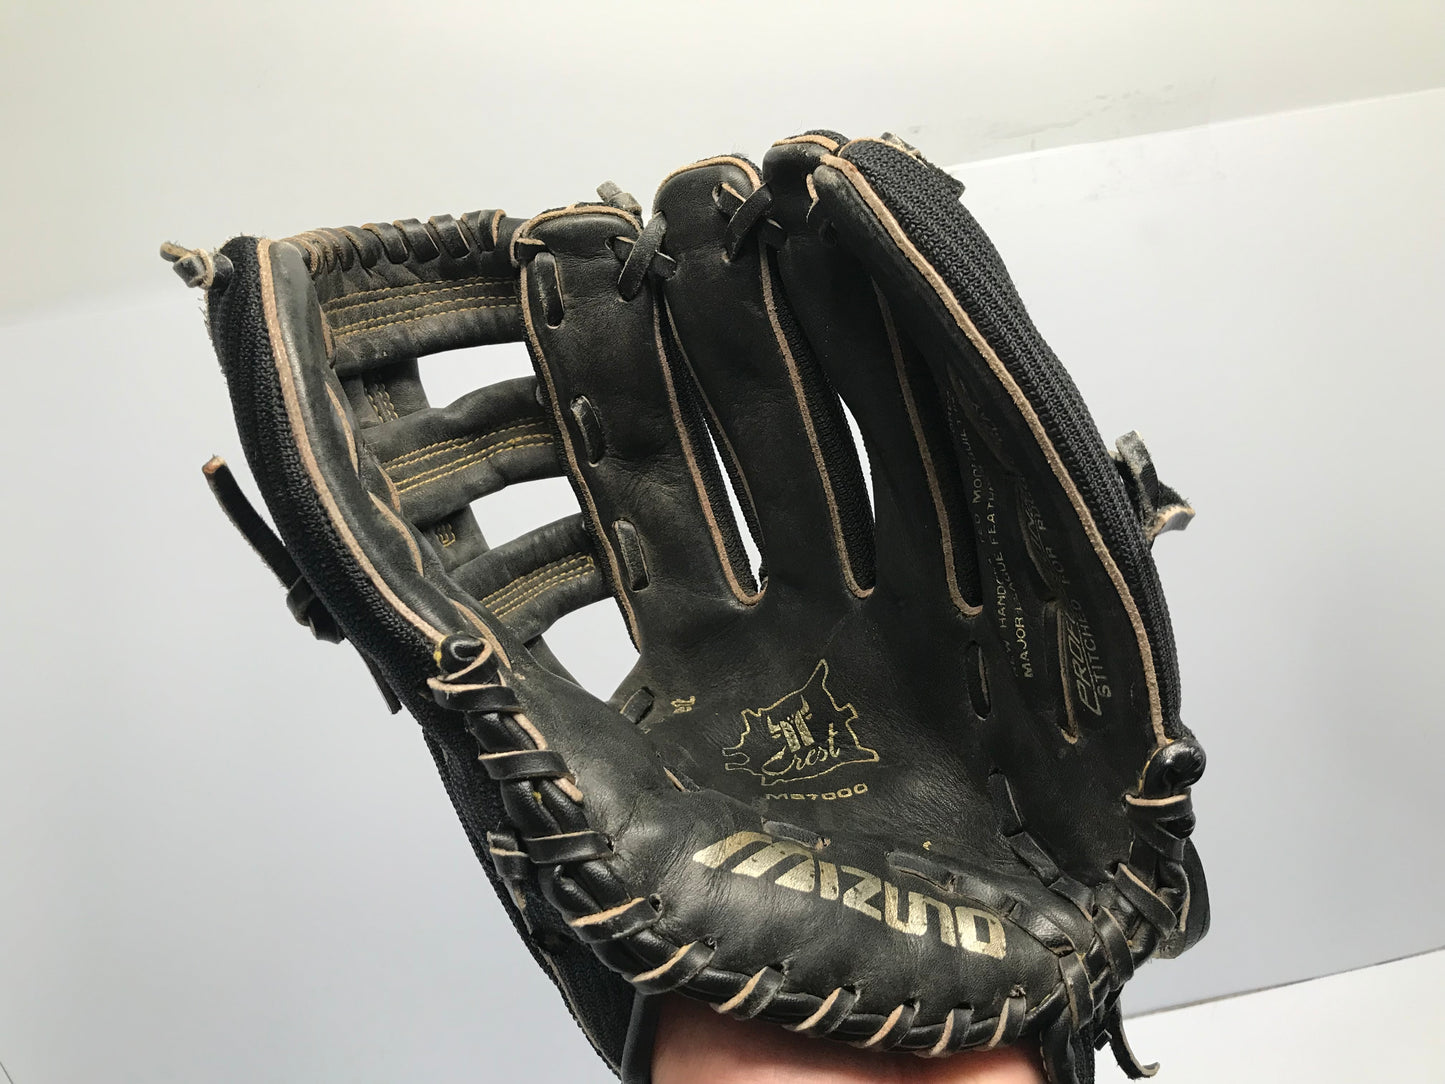 Baseball Glove Men's Size 12 inch Mizuno Black Leather Fits on Left Hand